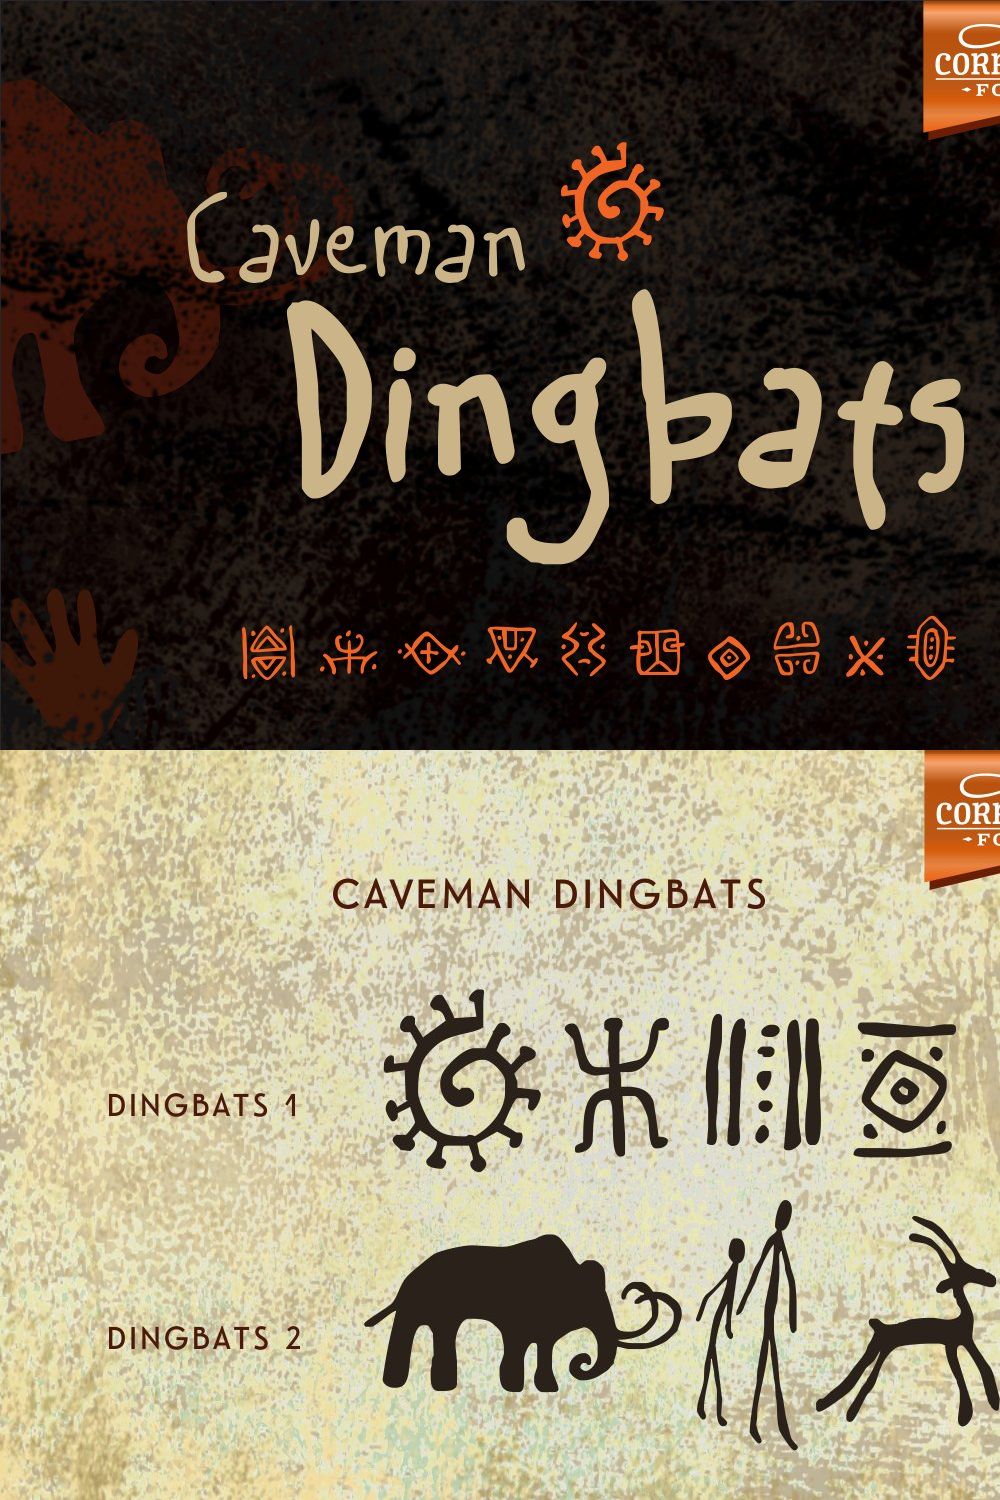 Caveman Dingbats pinterest preview image.